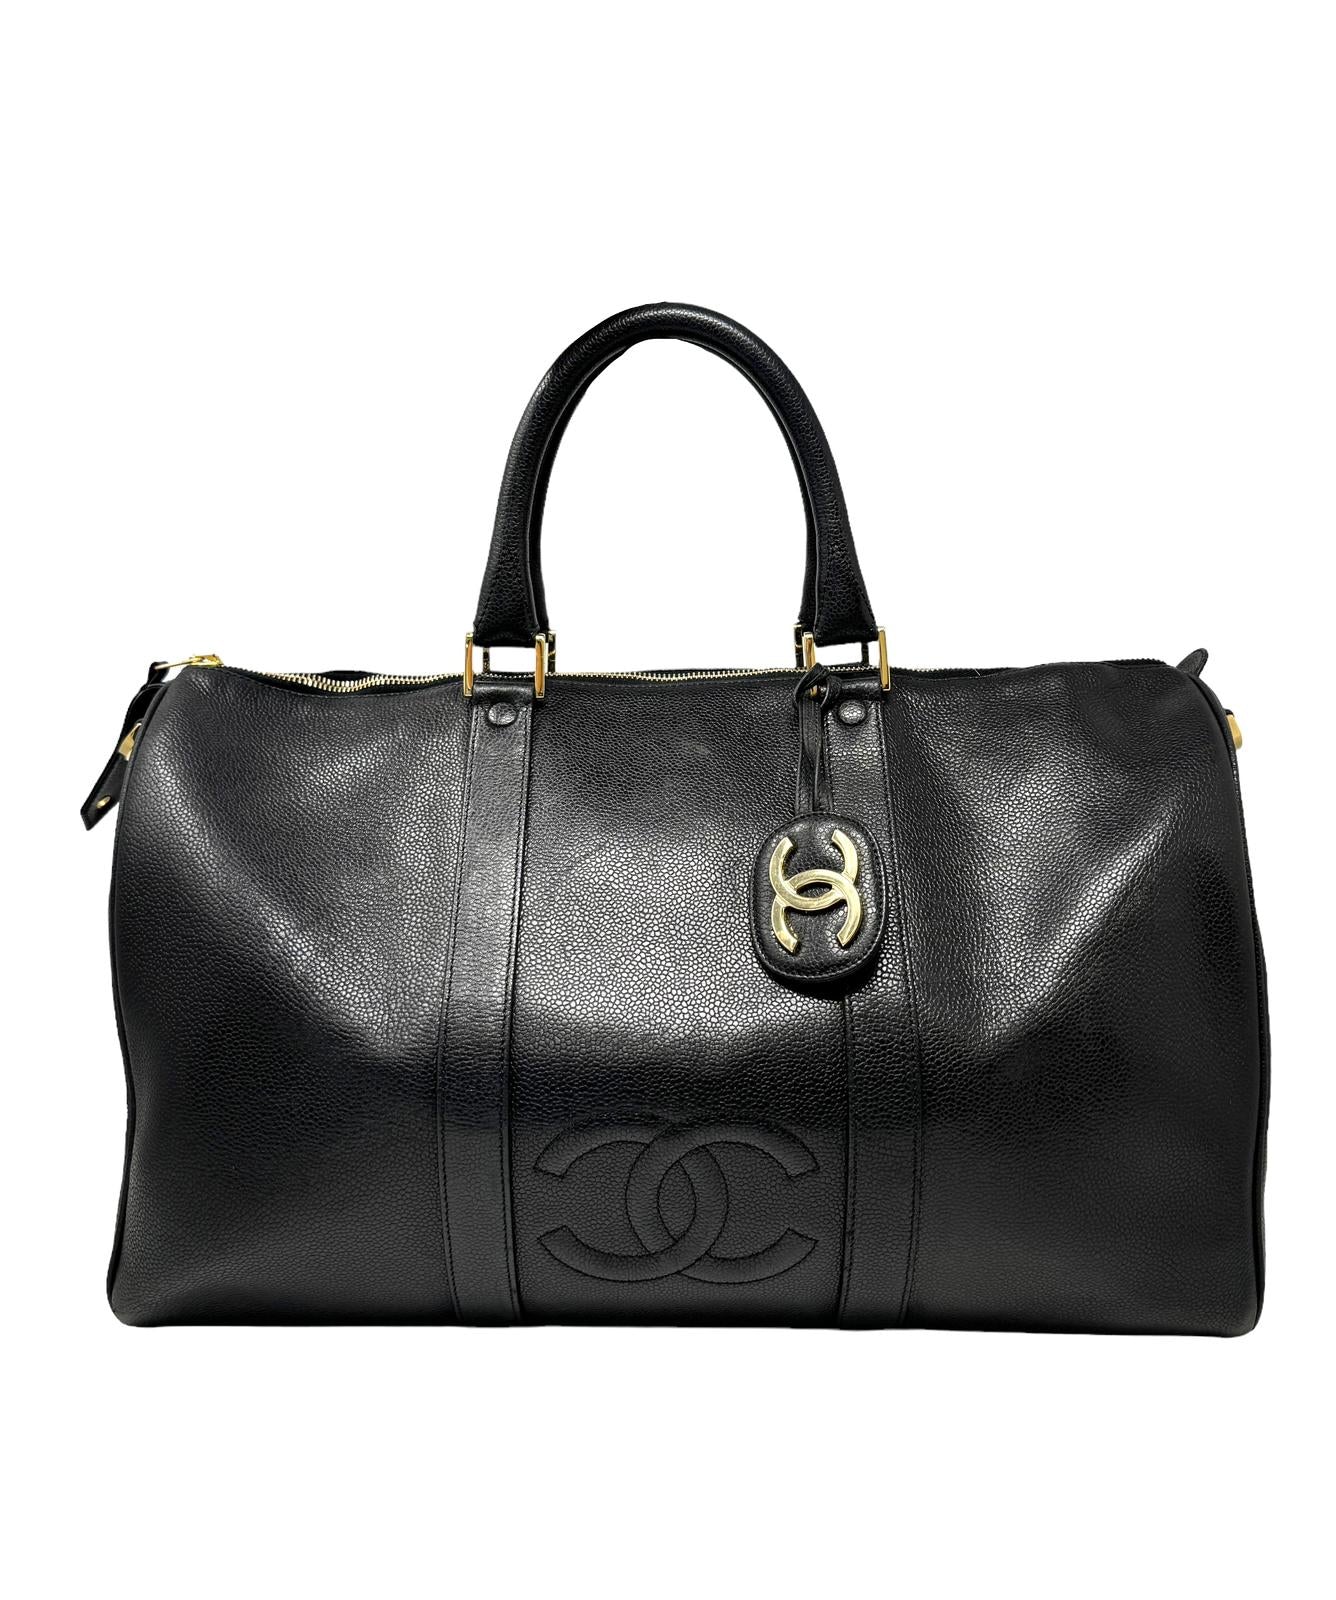 Chanel Black Caviar Carry On Bag 2/2